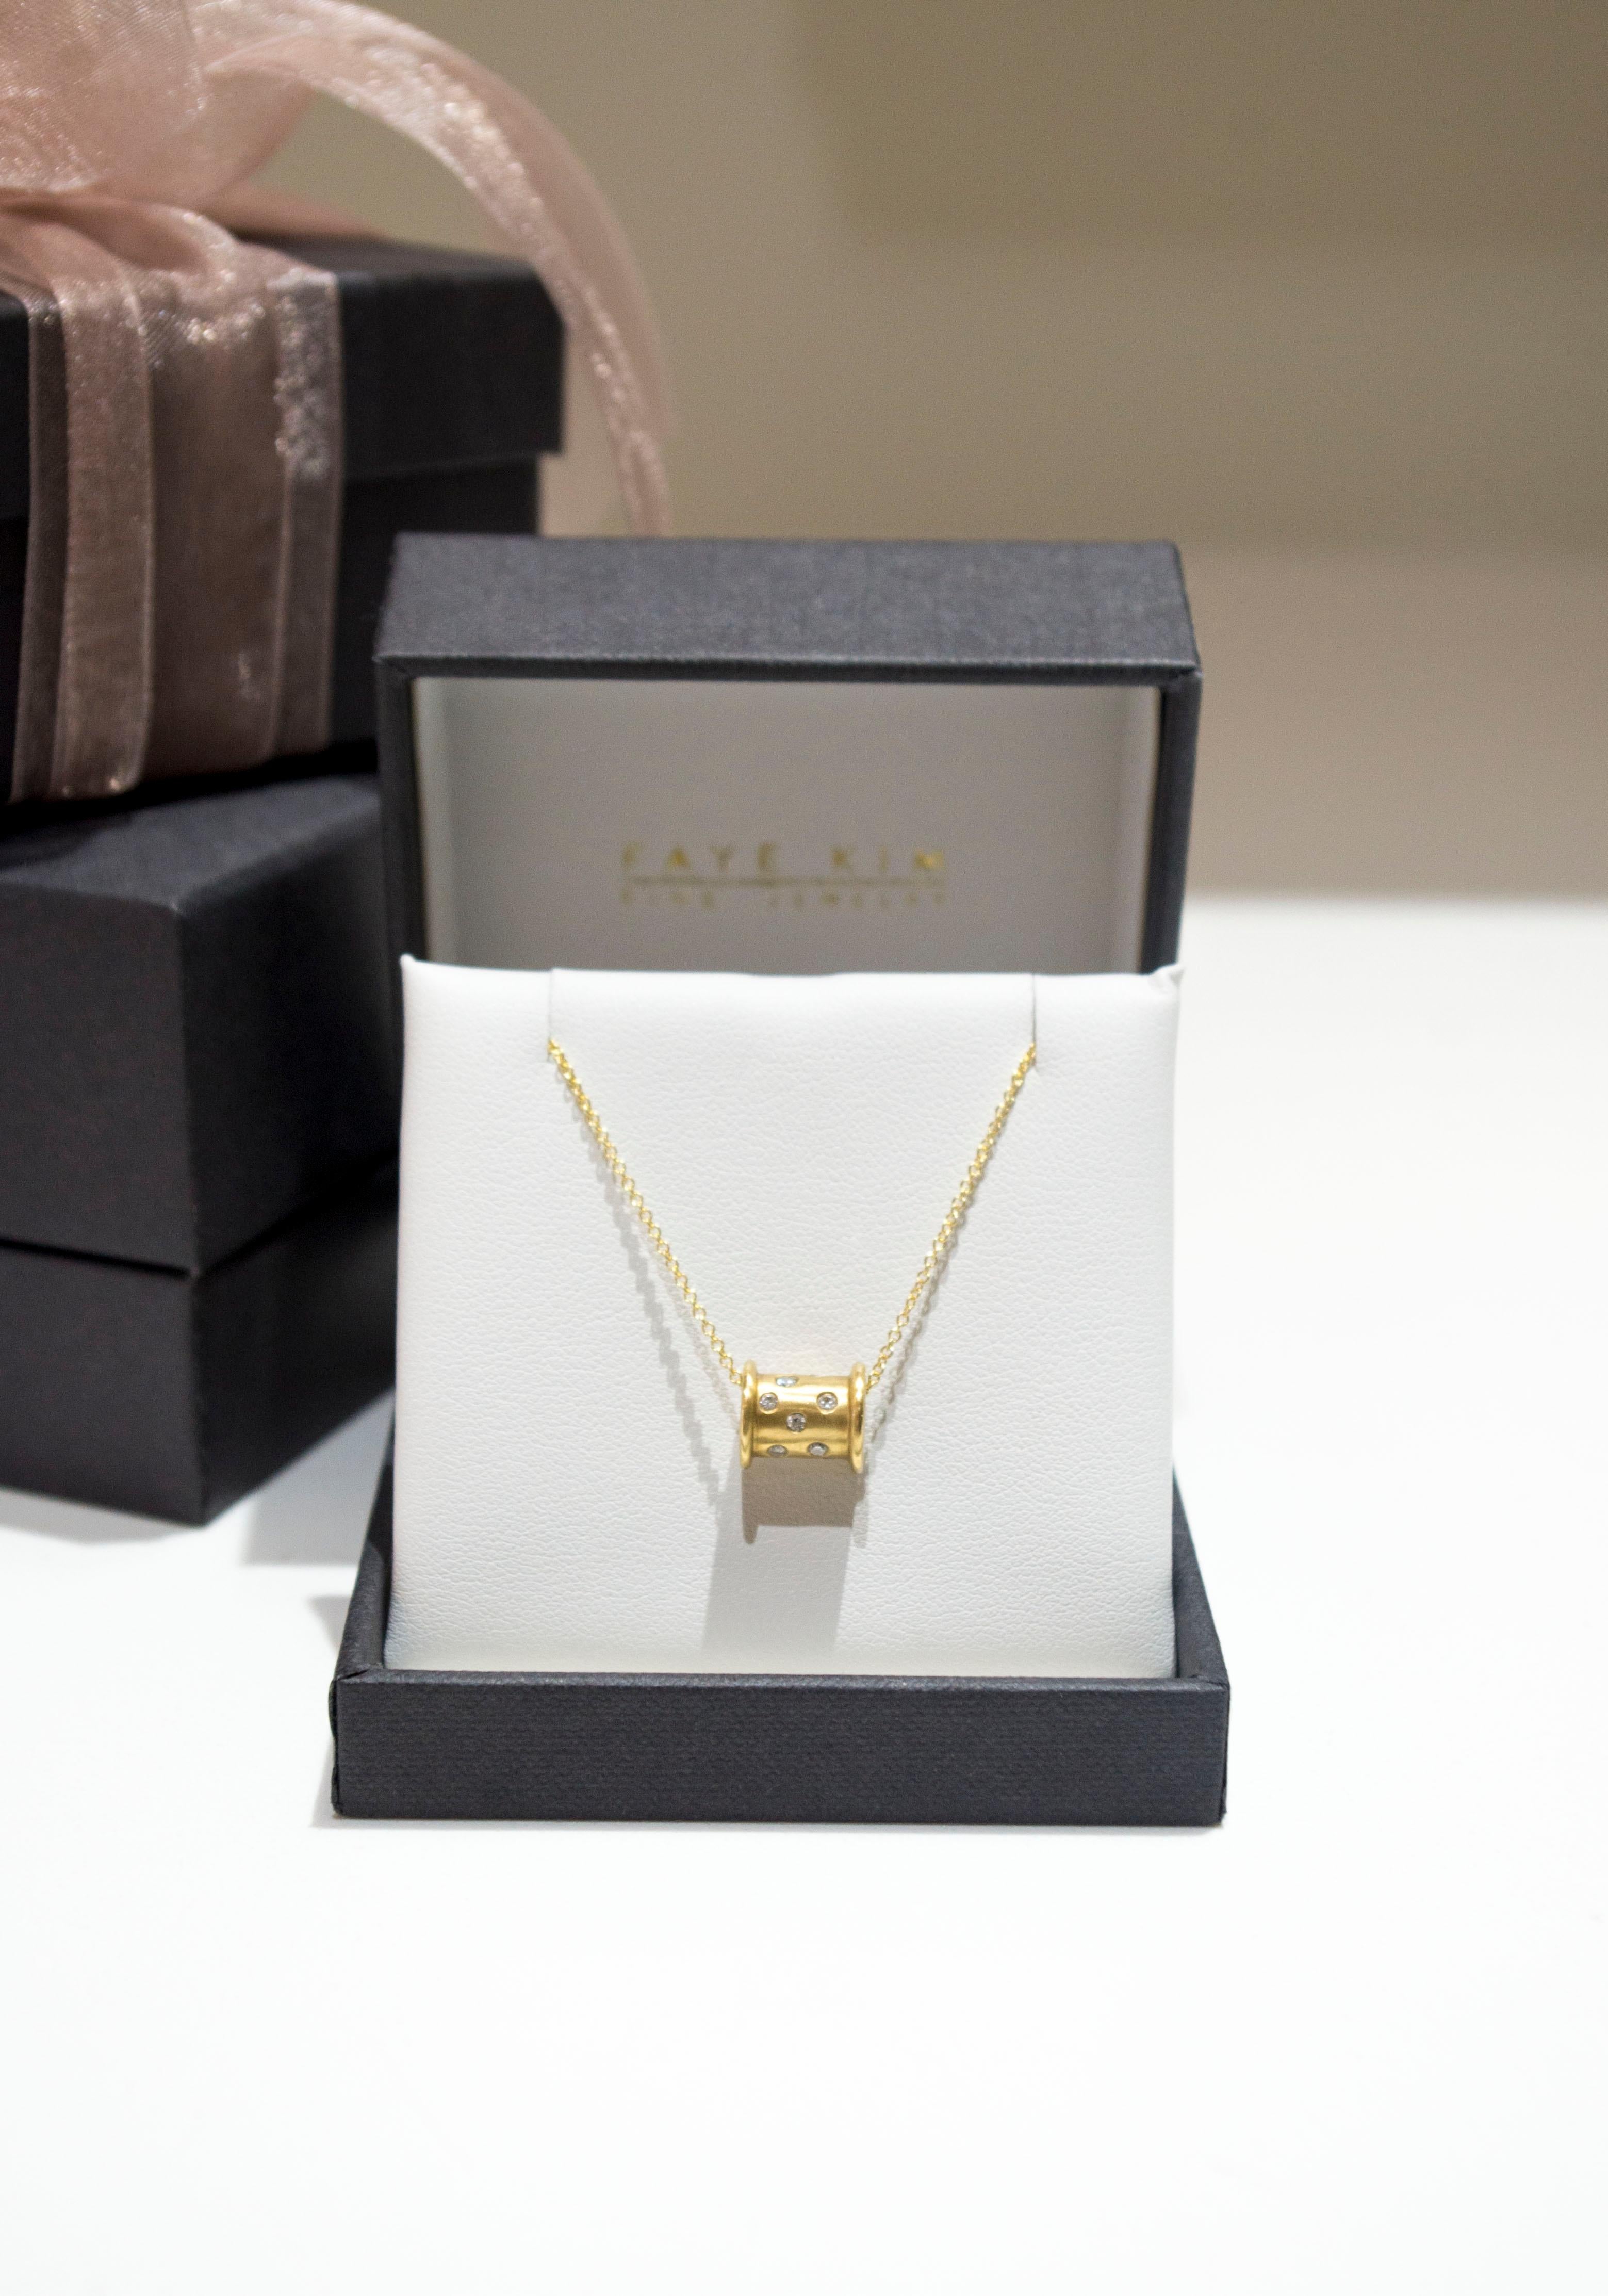 Round Cut Faye Kim 18 Karat Gold Diamond Spool Necklace